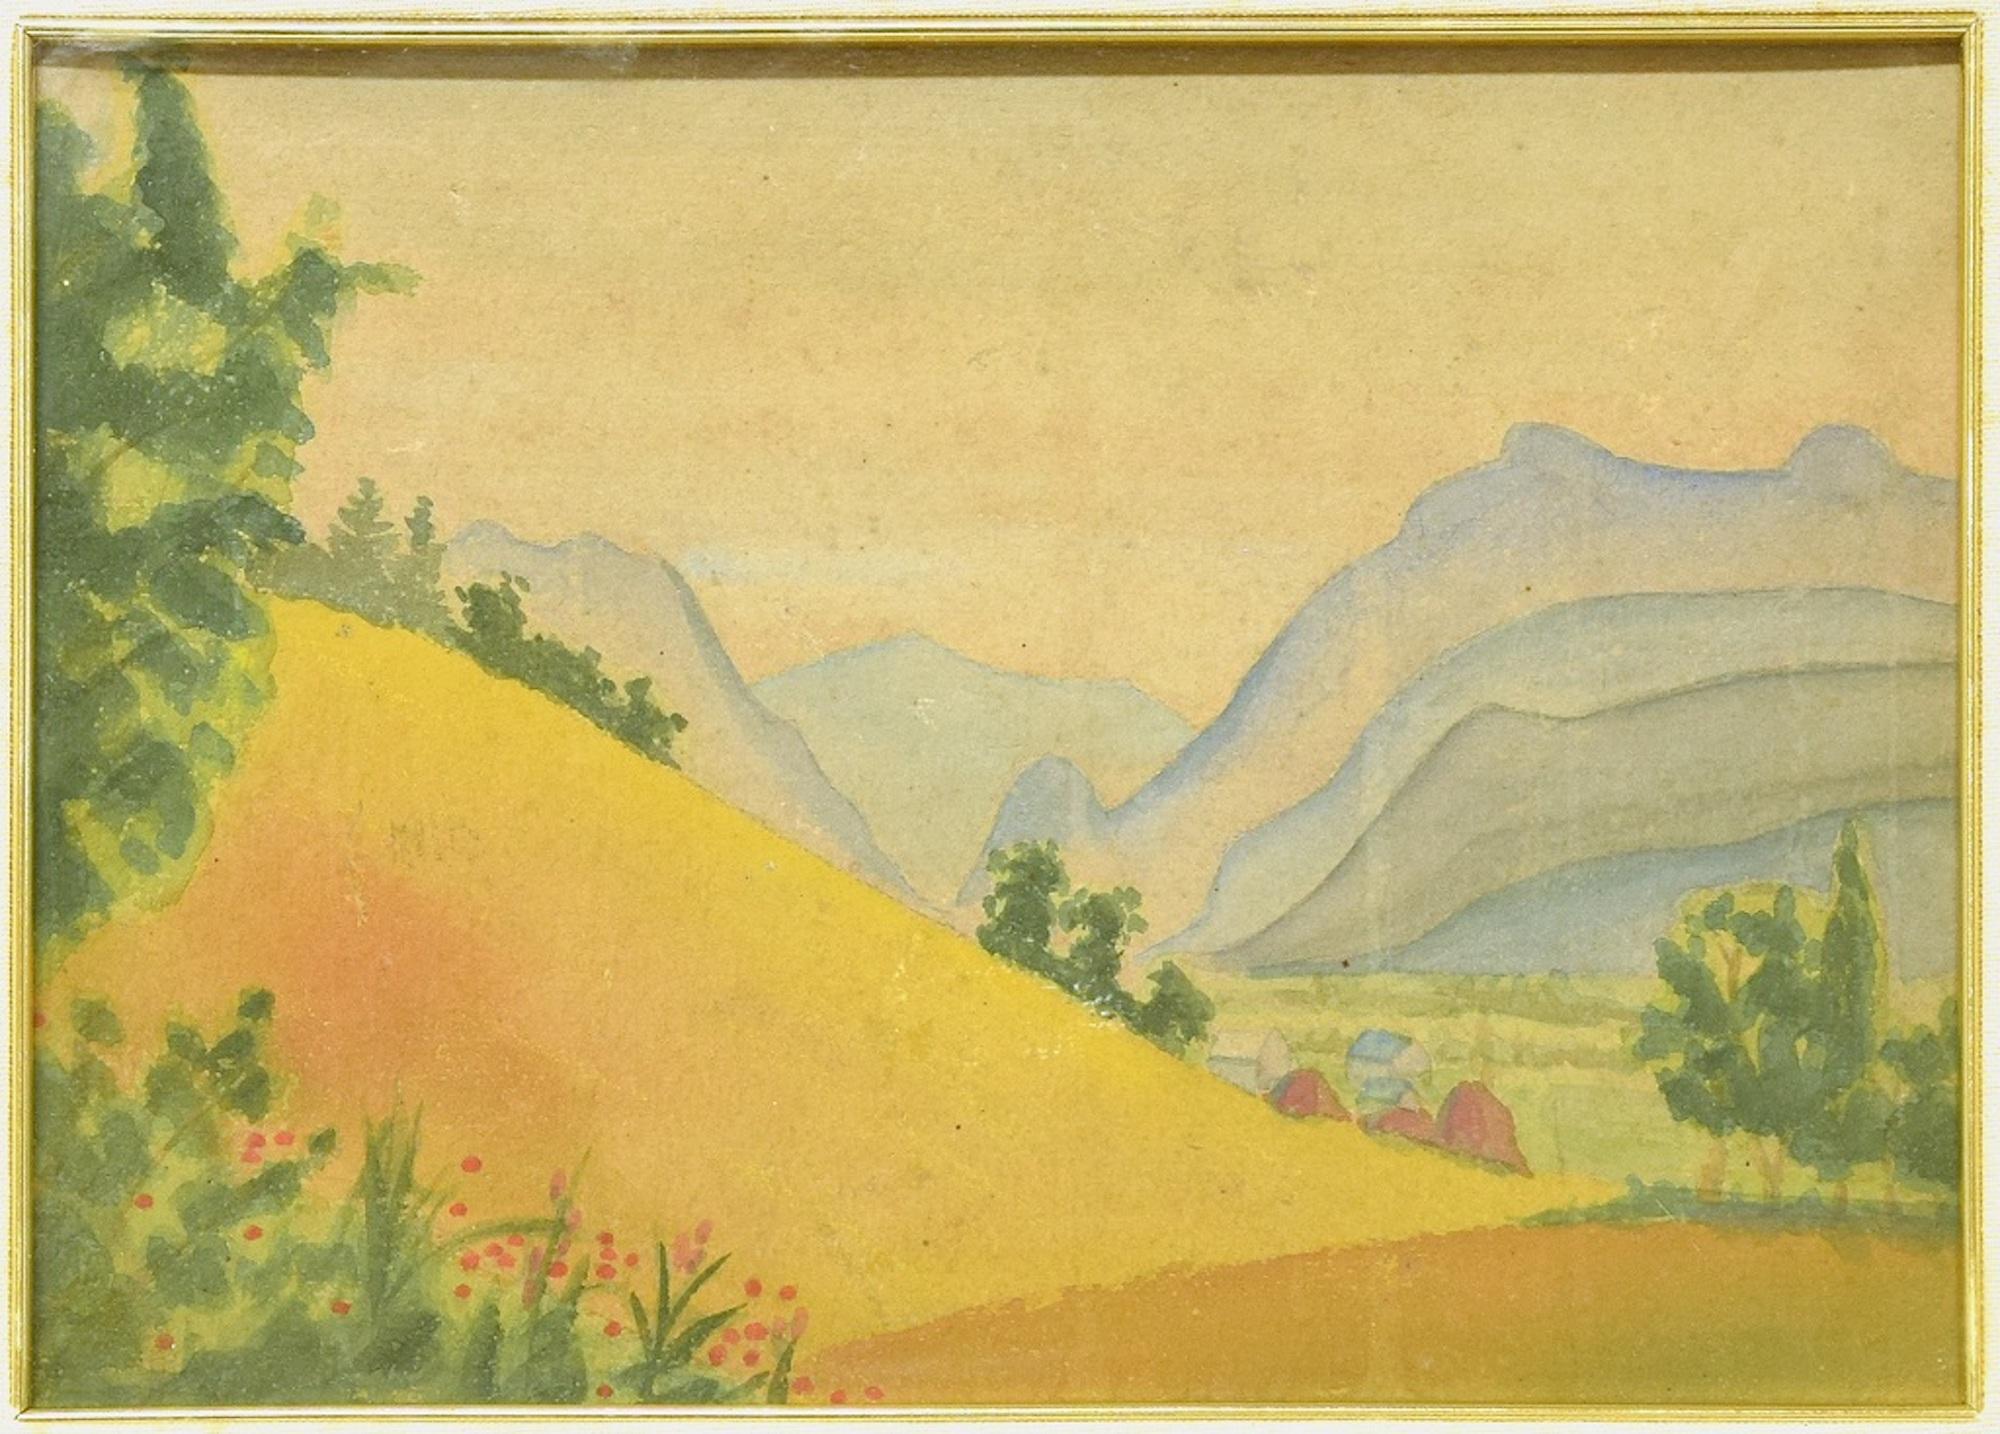 Marius Carion Landscape Painting - Mountainous Landscape - Original Watercolor on Cardboard by M. Carion - 1930s